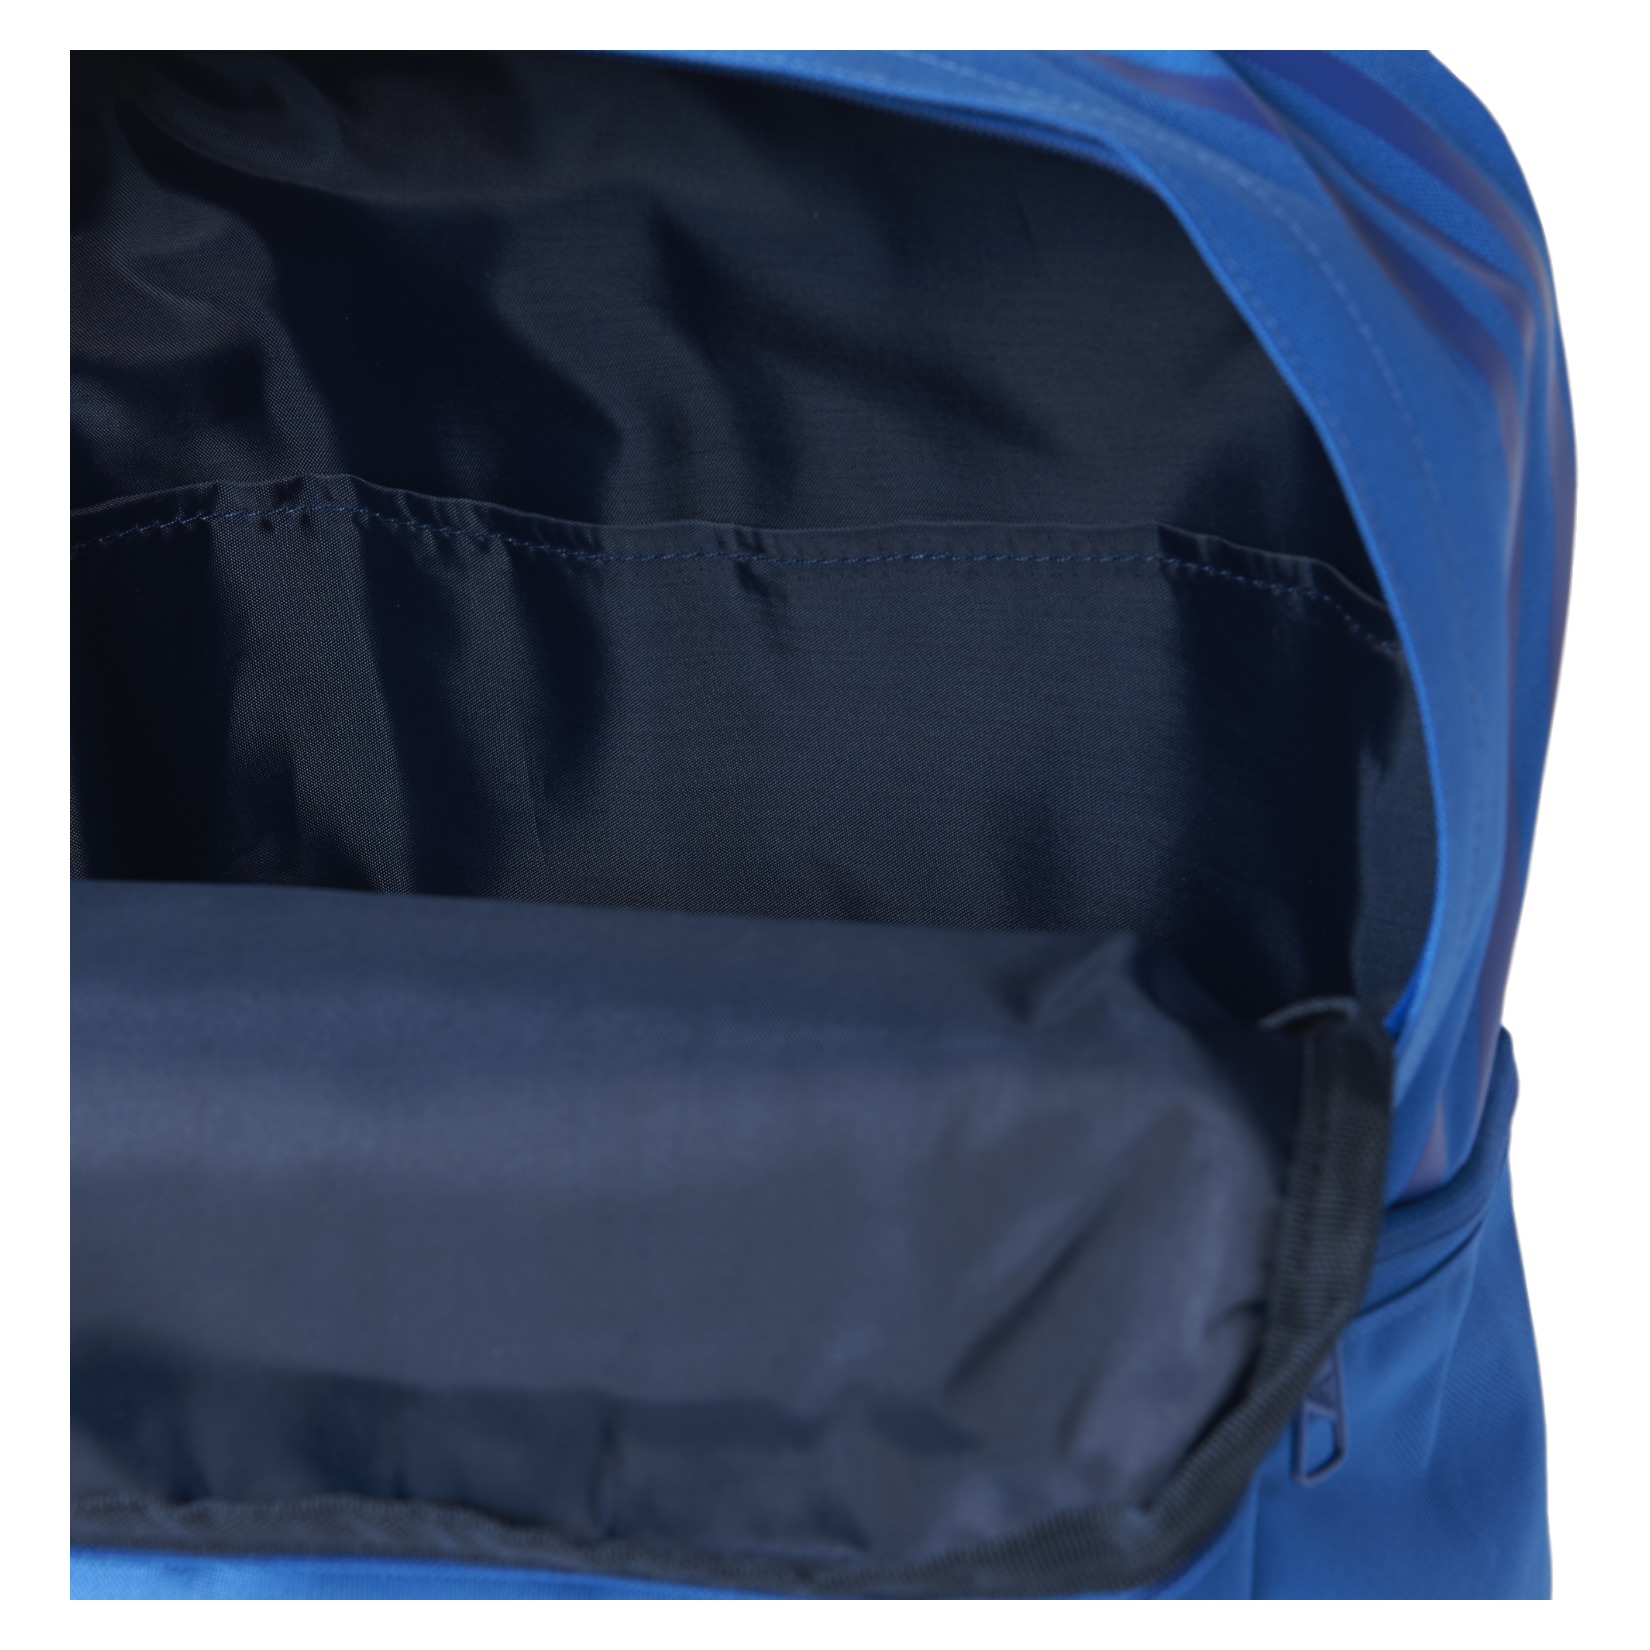 adidas Tiro Backpack